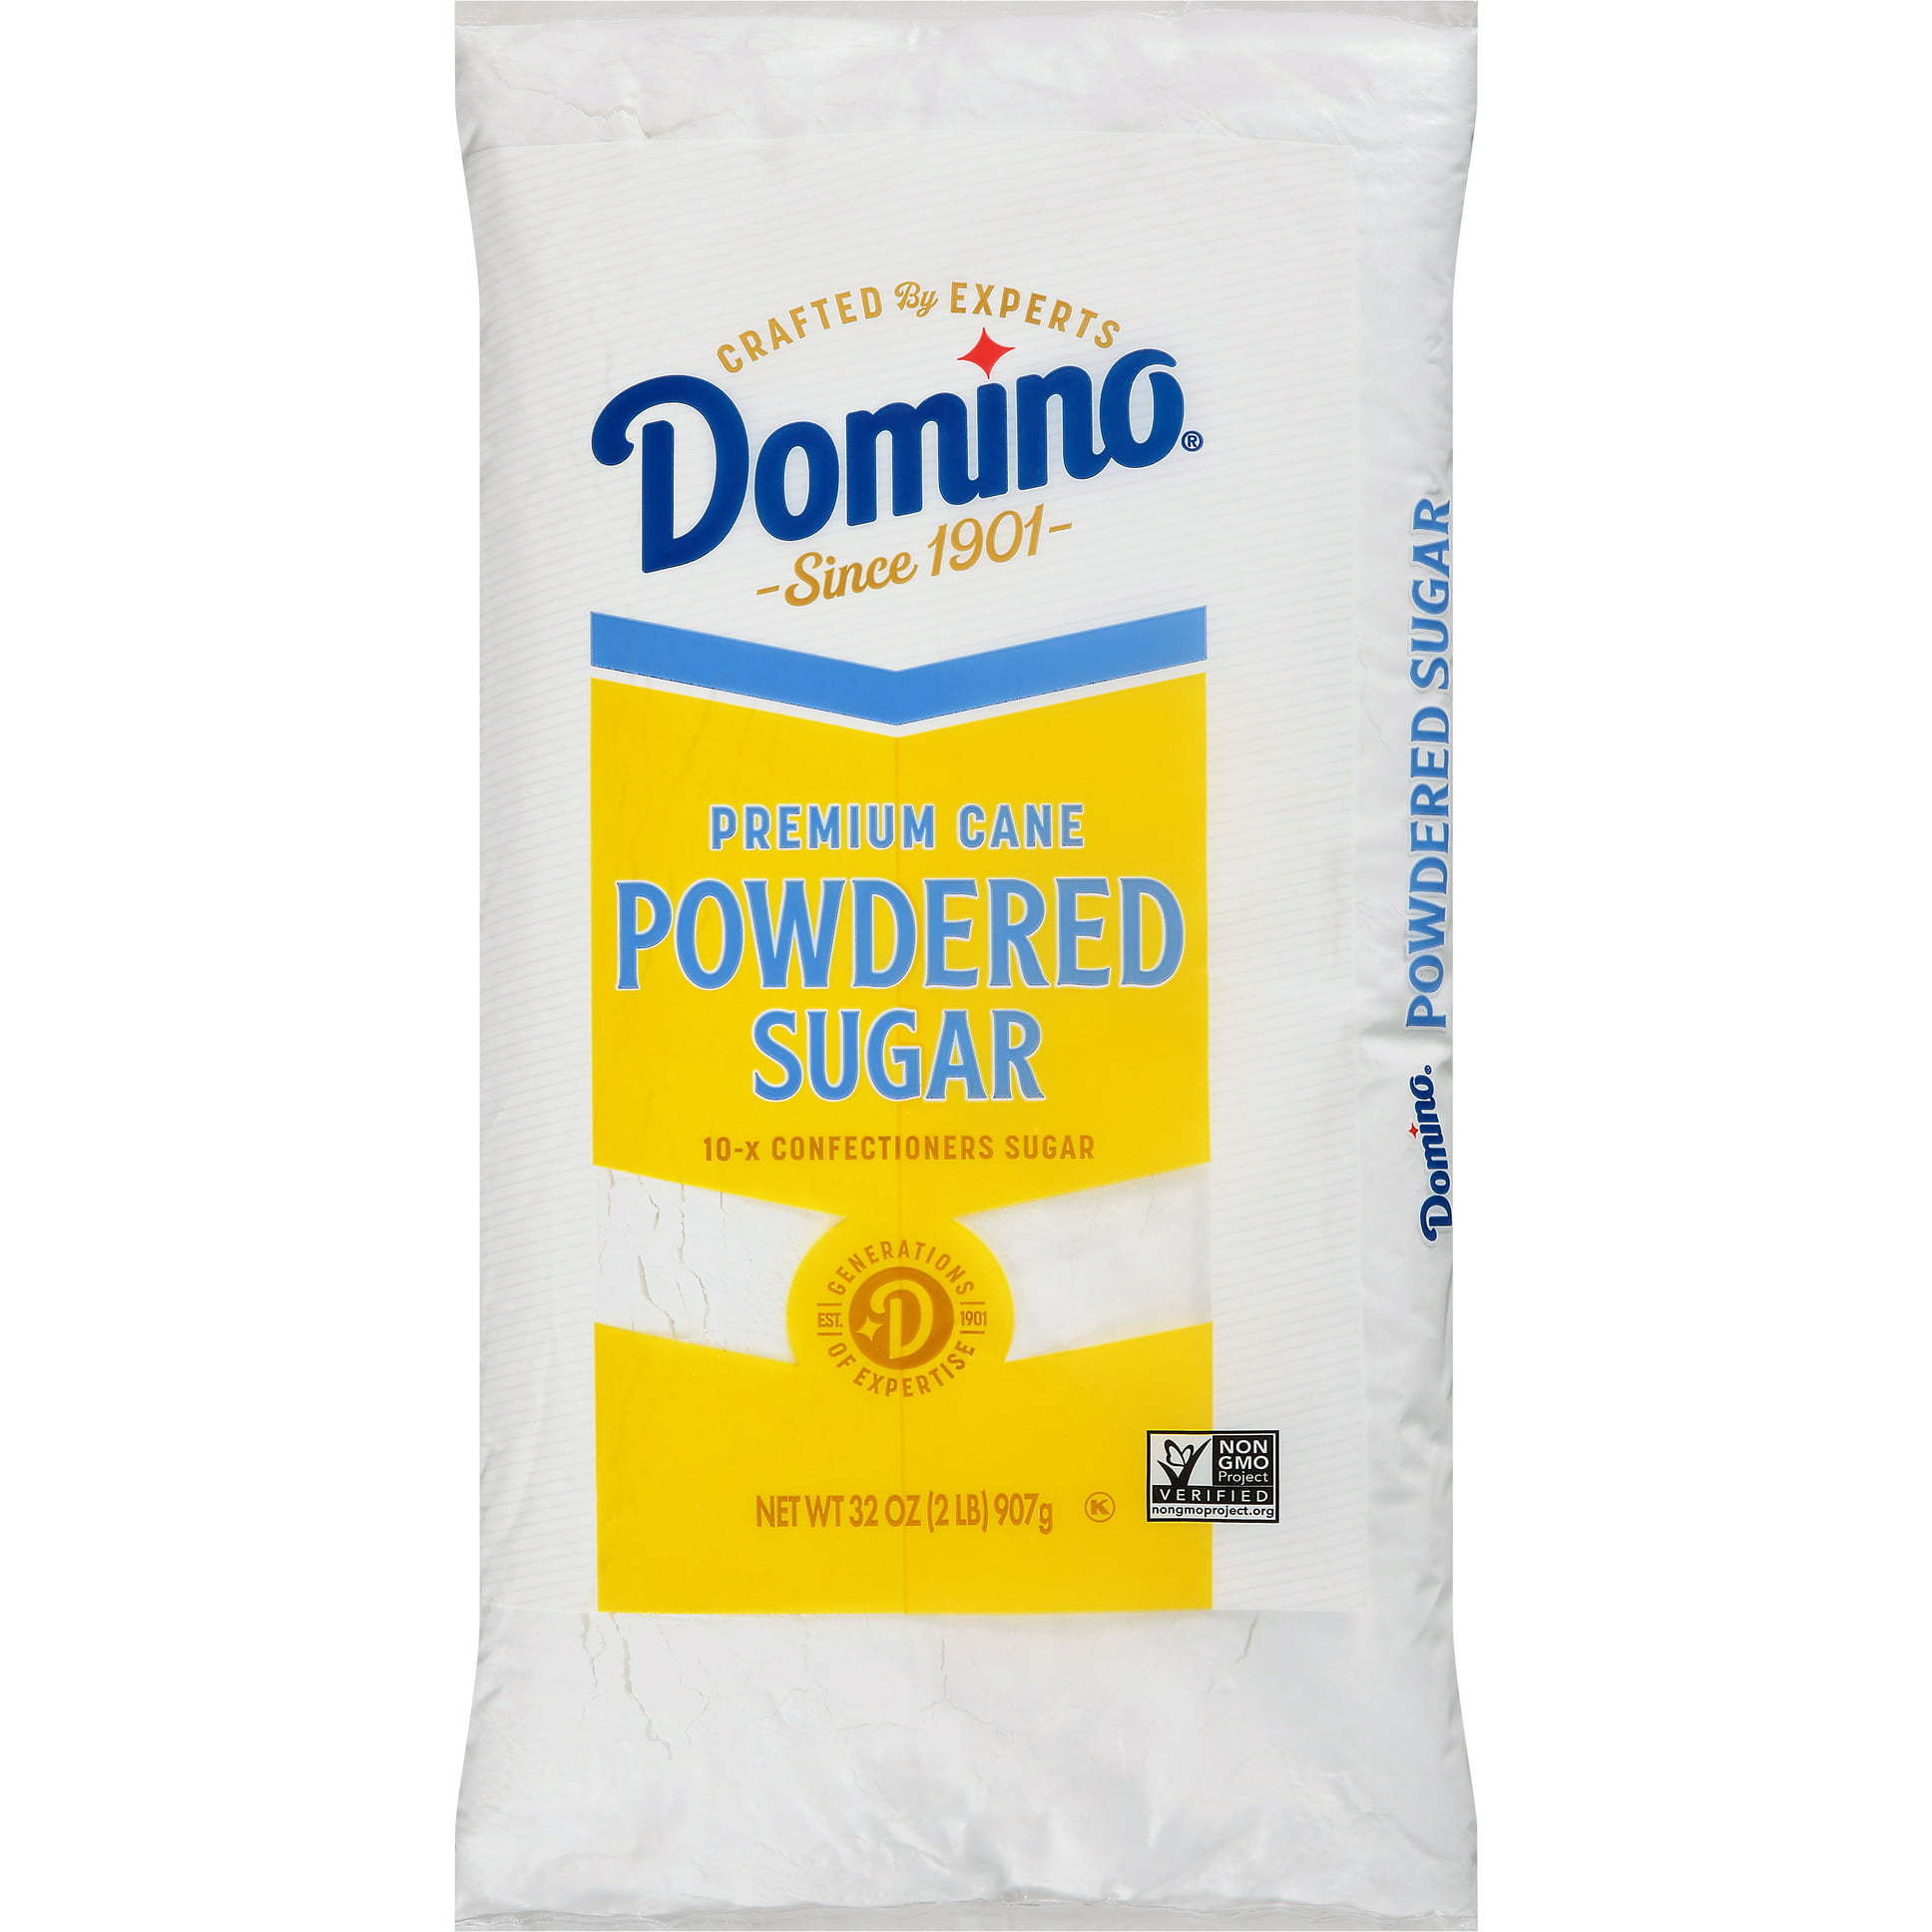 Case of 4 - Domino Premium Cane Powdered Sugar - 2 Lb (907 Gm)